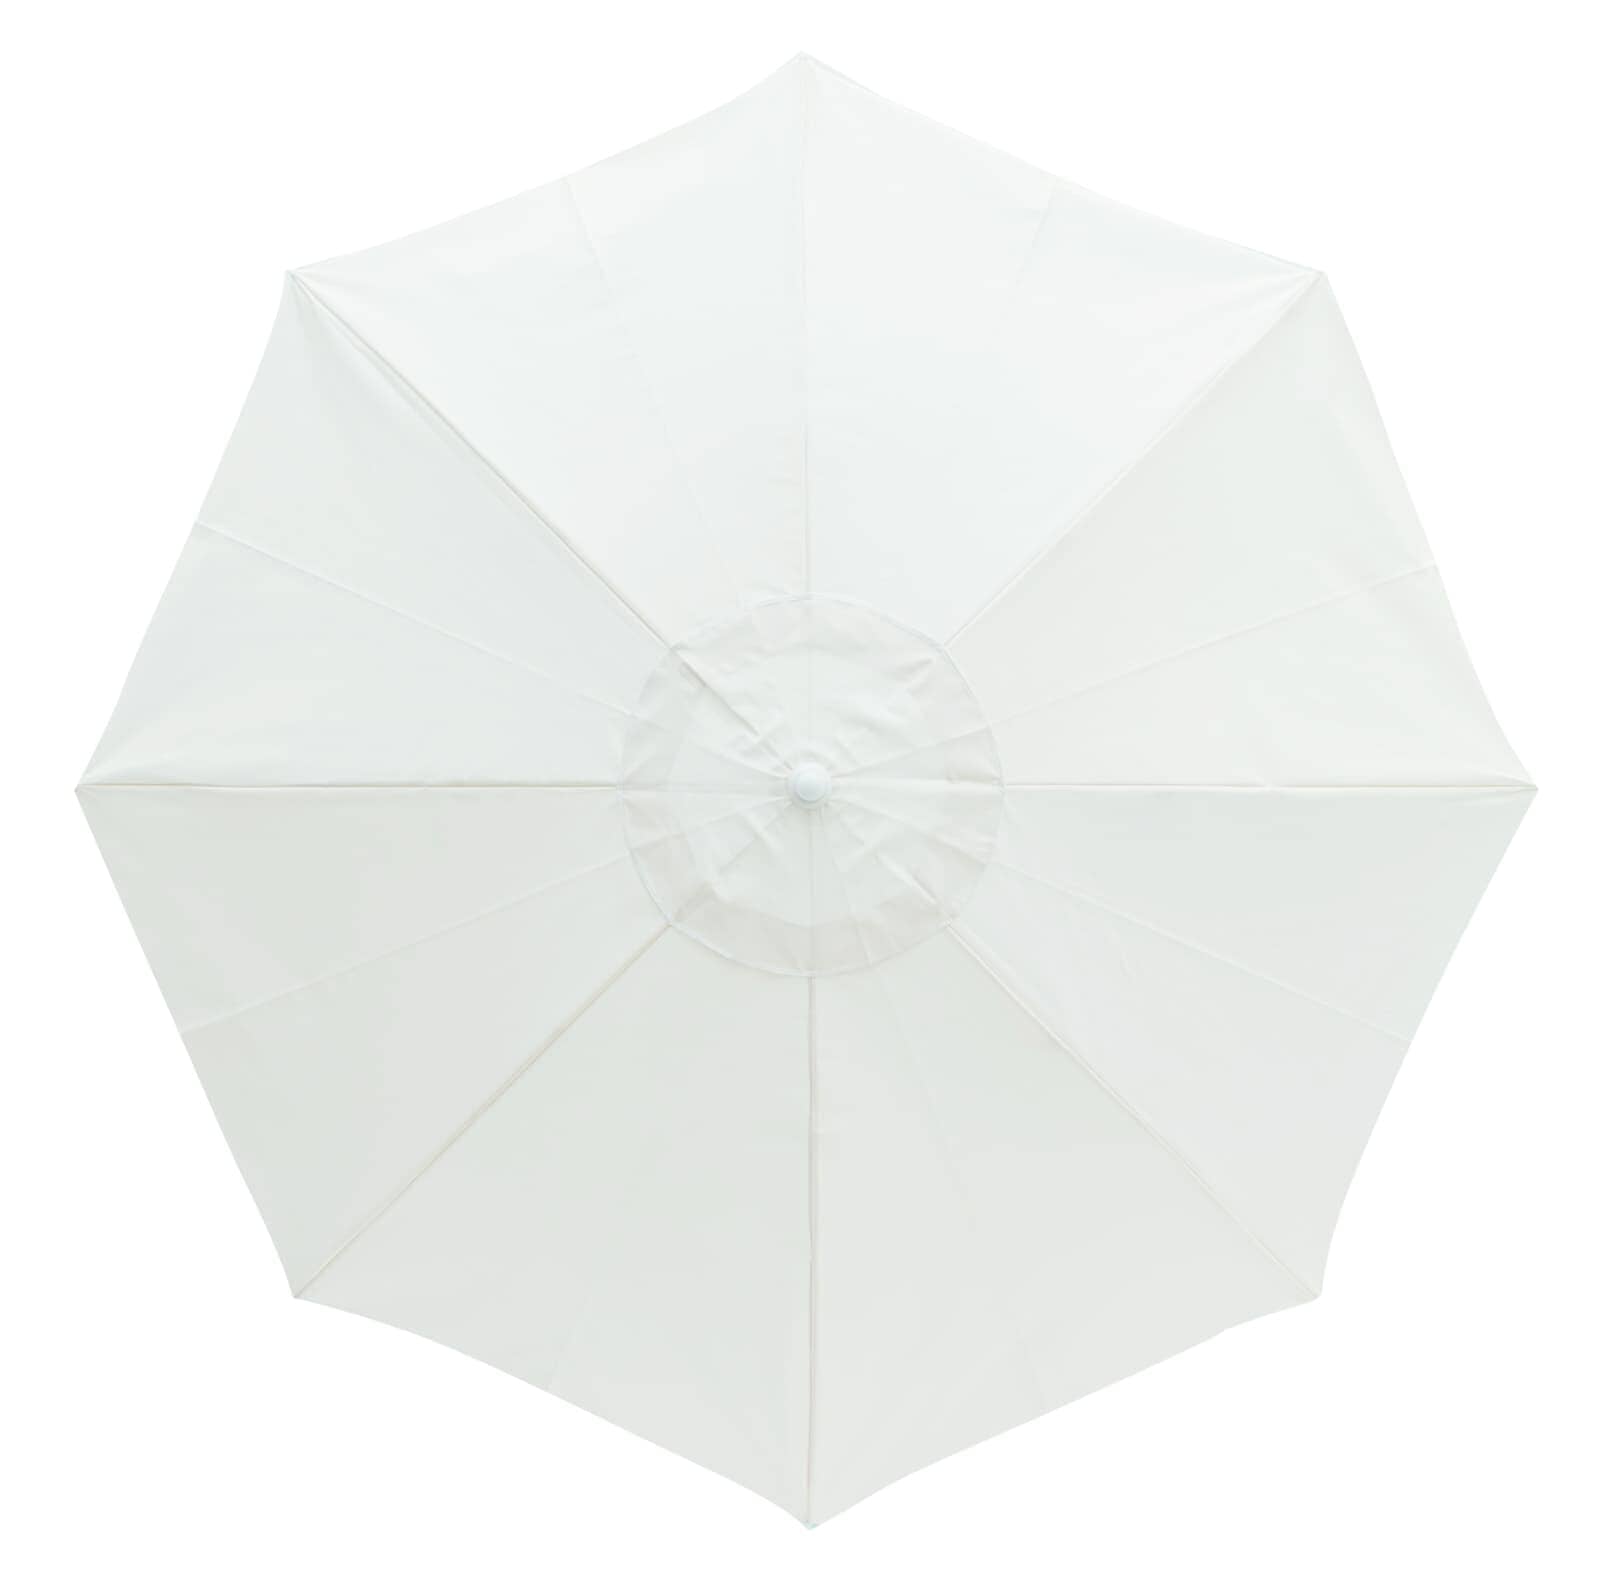 studio image of white family beach umbrella top view